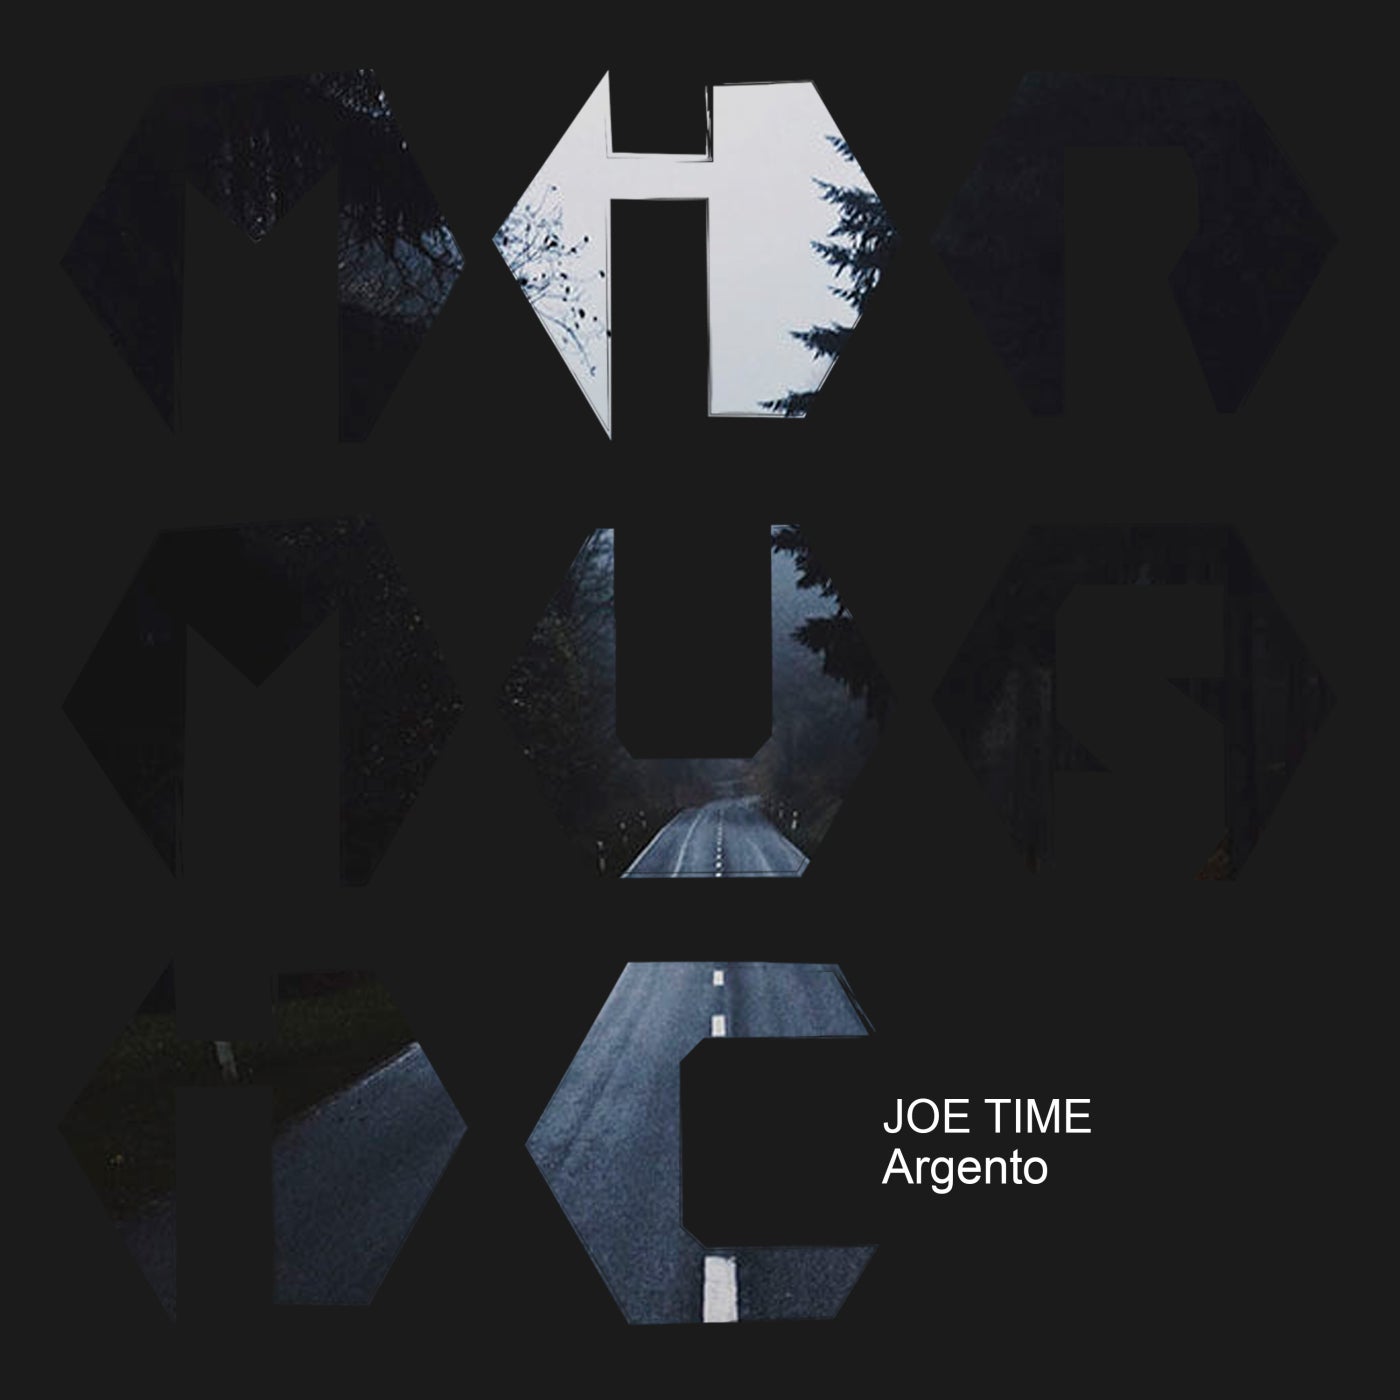 Joe Time - Argento [MIR MUSIC]